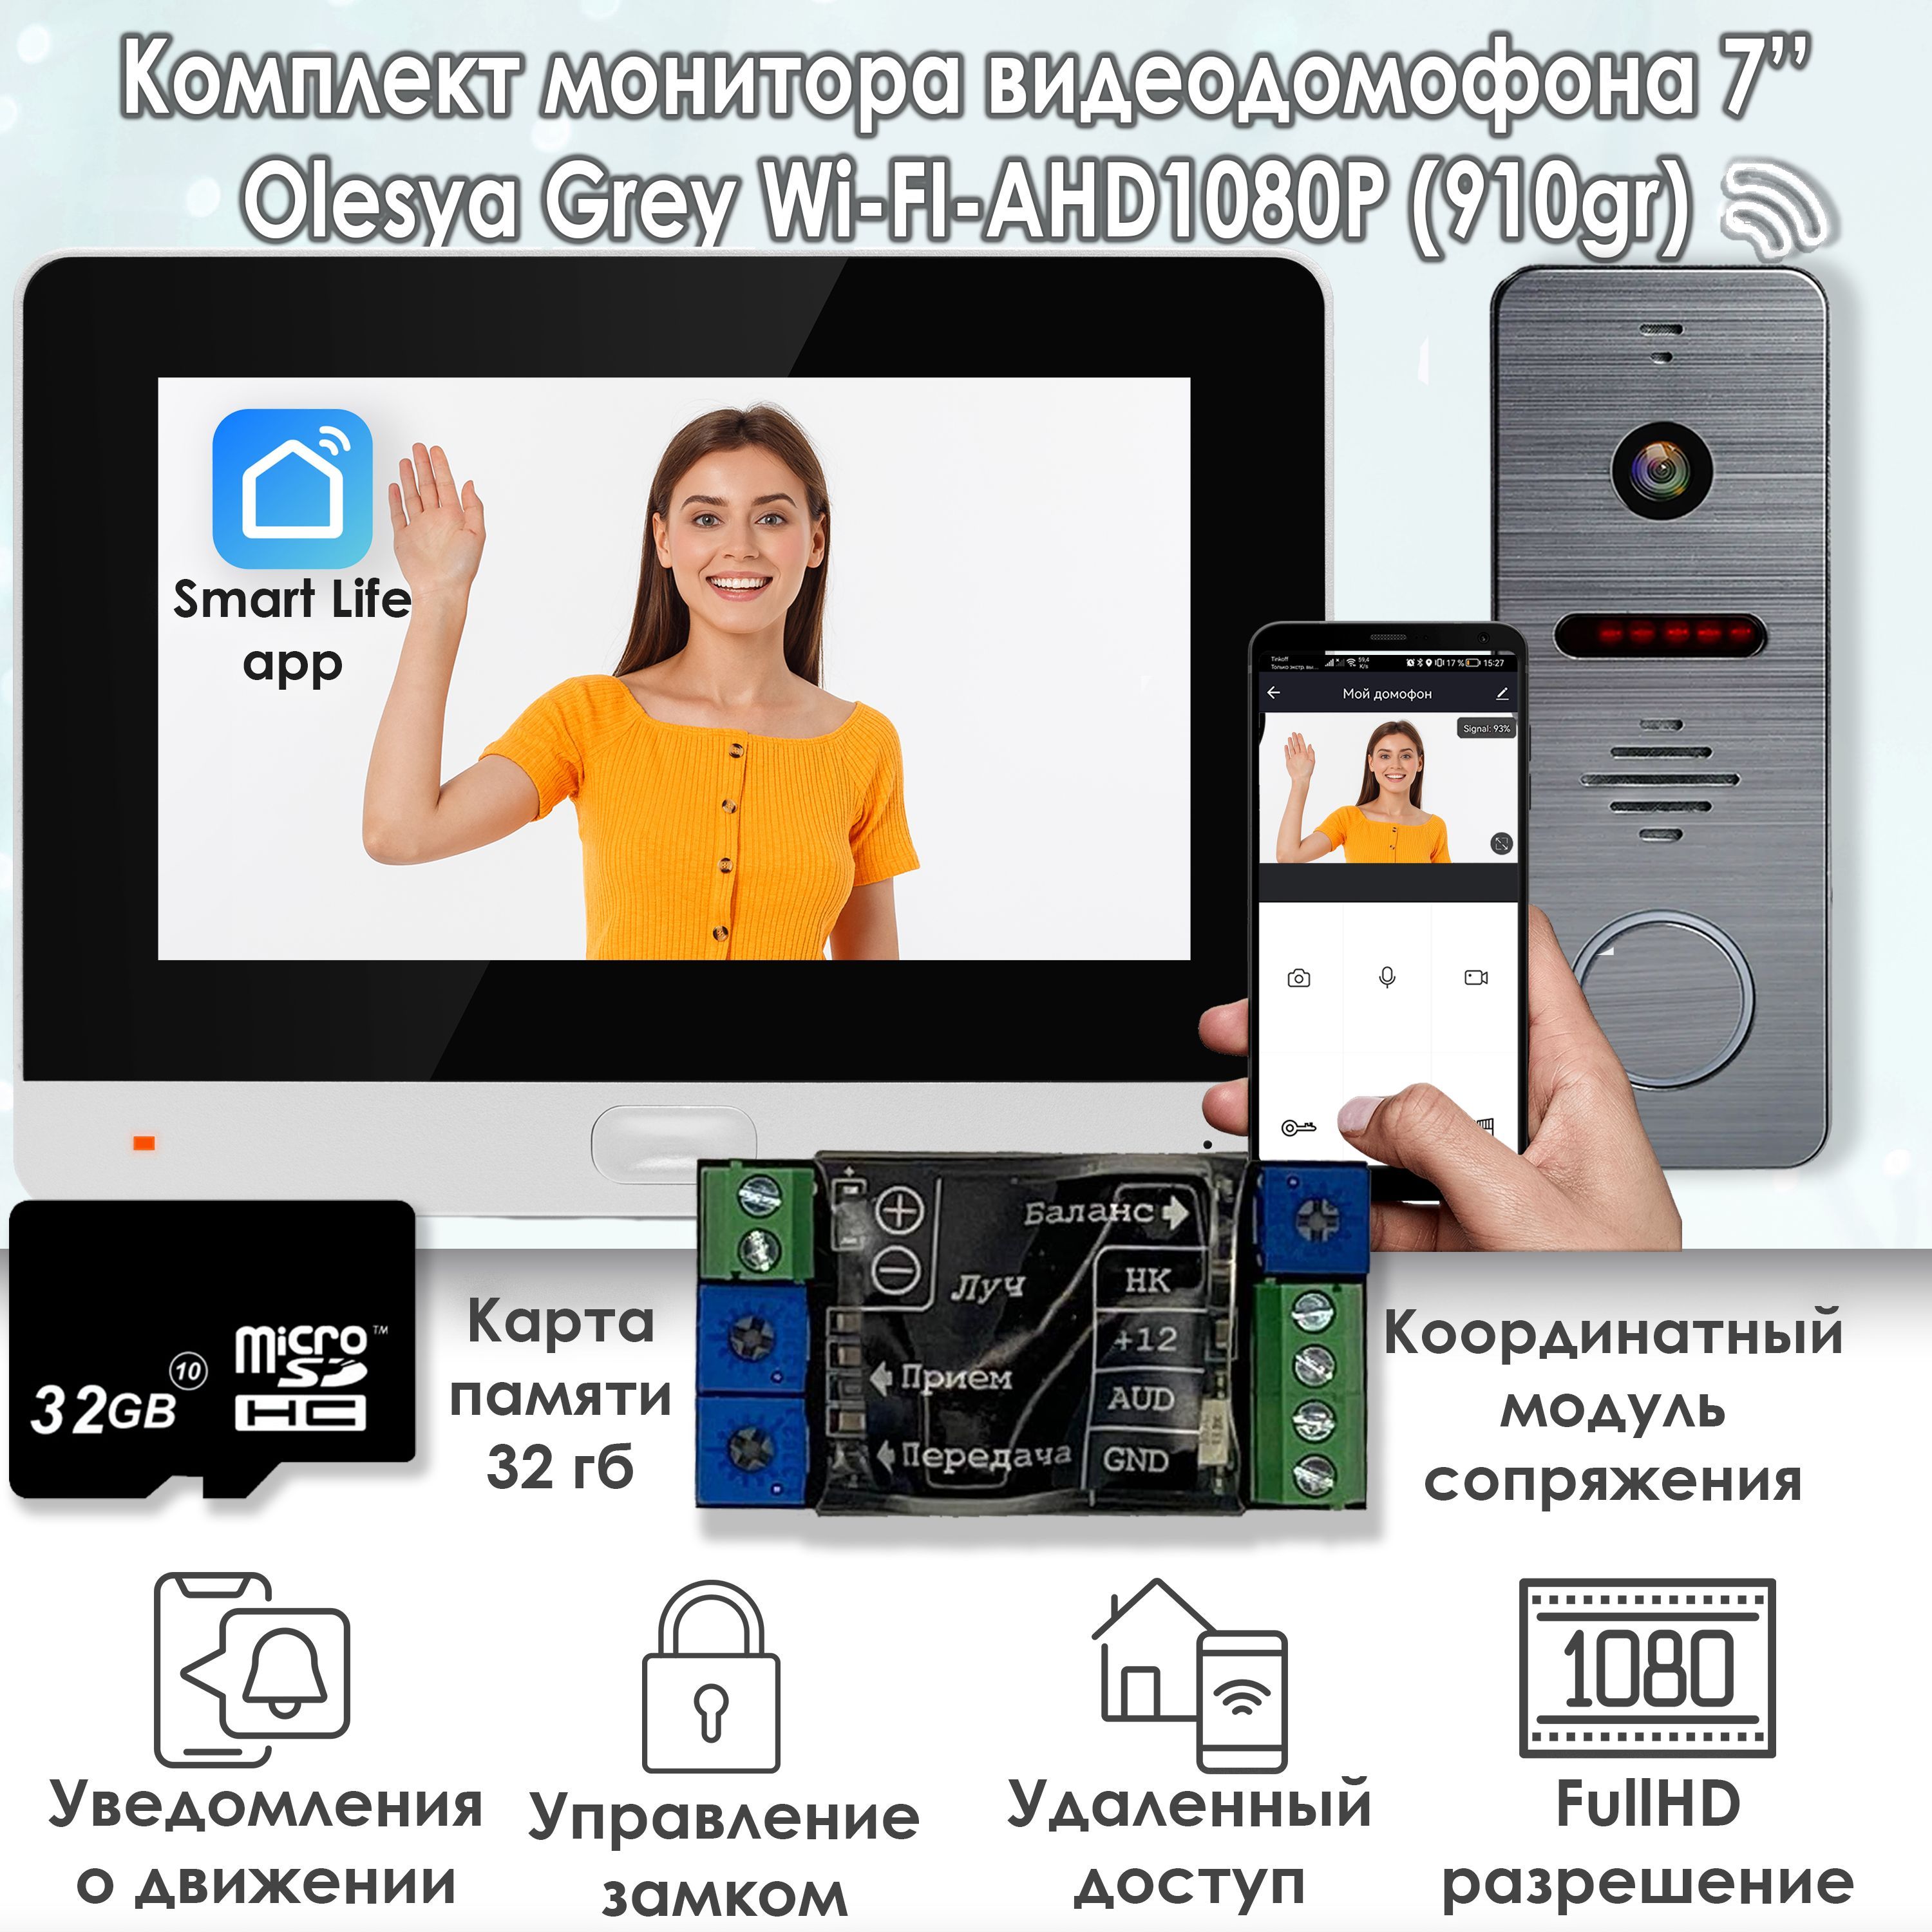 Комплект видеодомофона Alfavision Olesya Wi-Fi AHD1080P Full HD (910gr), Черный oxalis full arm кресло